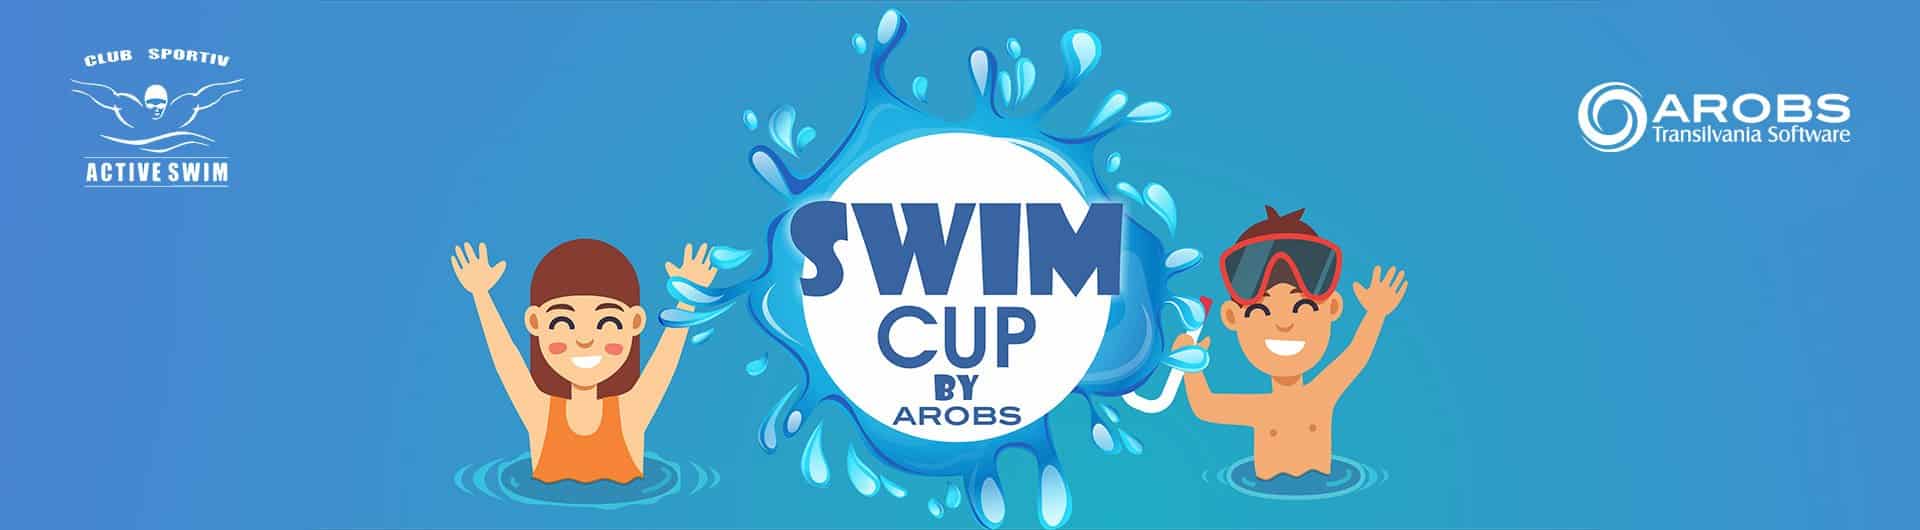 swimCup-banner